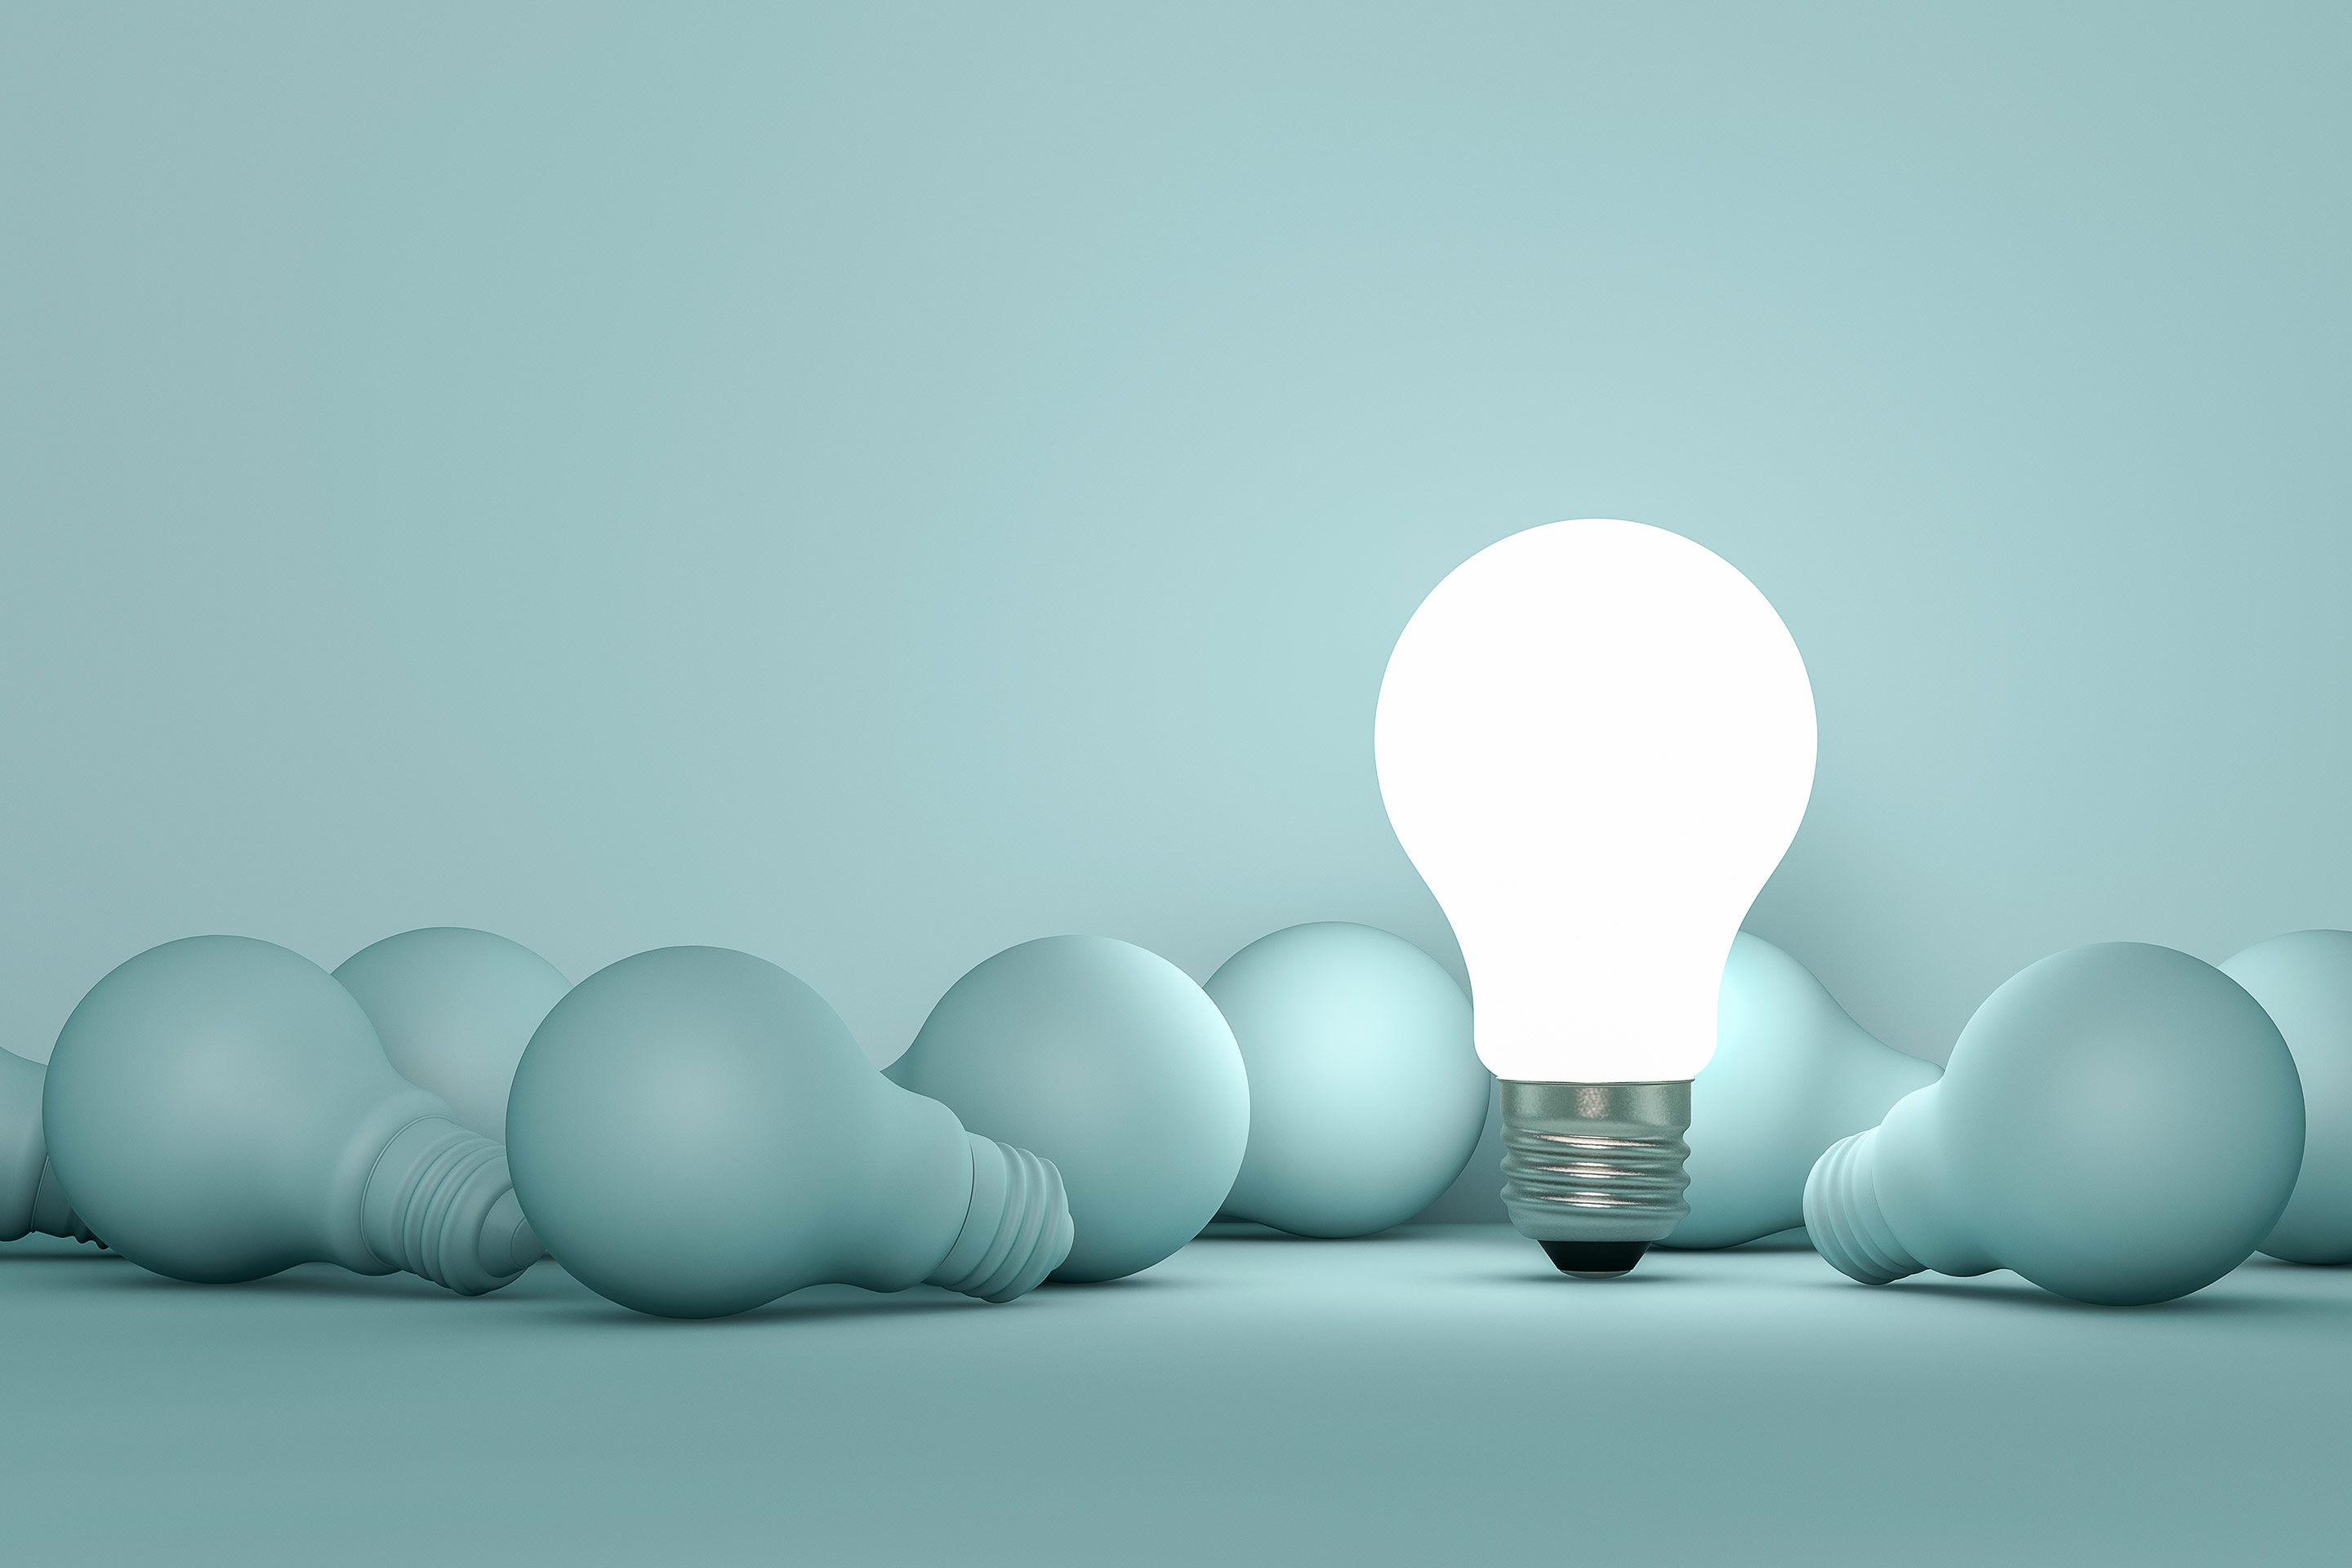 A bright lightbulb stands among a group of dark lightbulbs representing intelligence